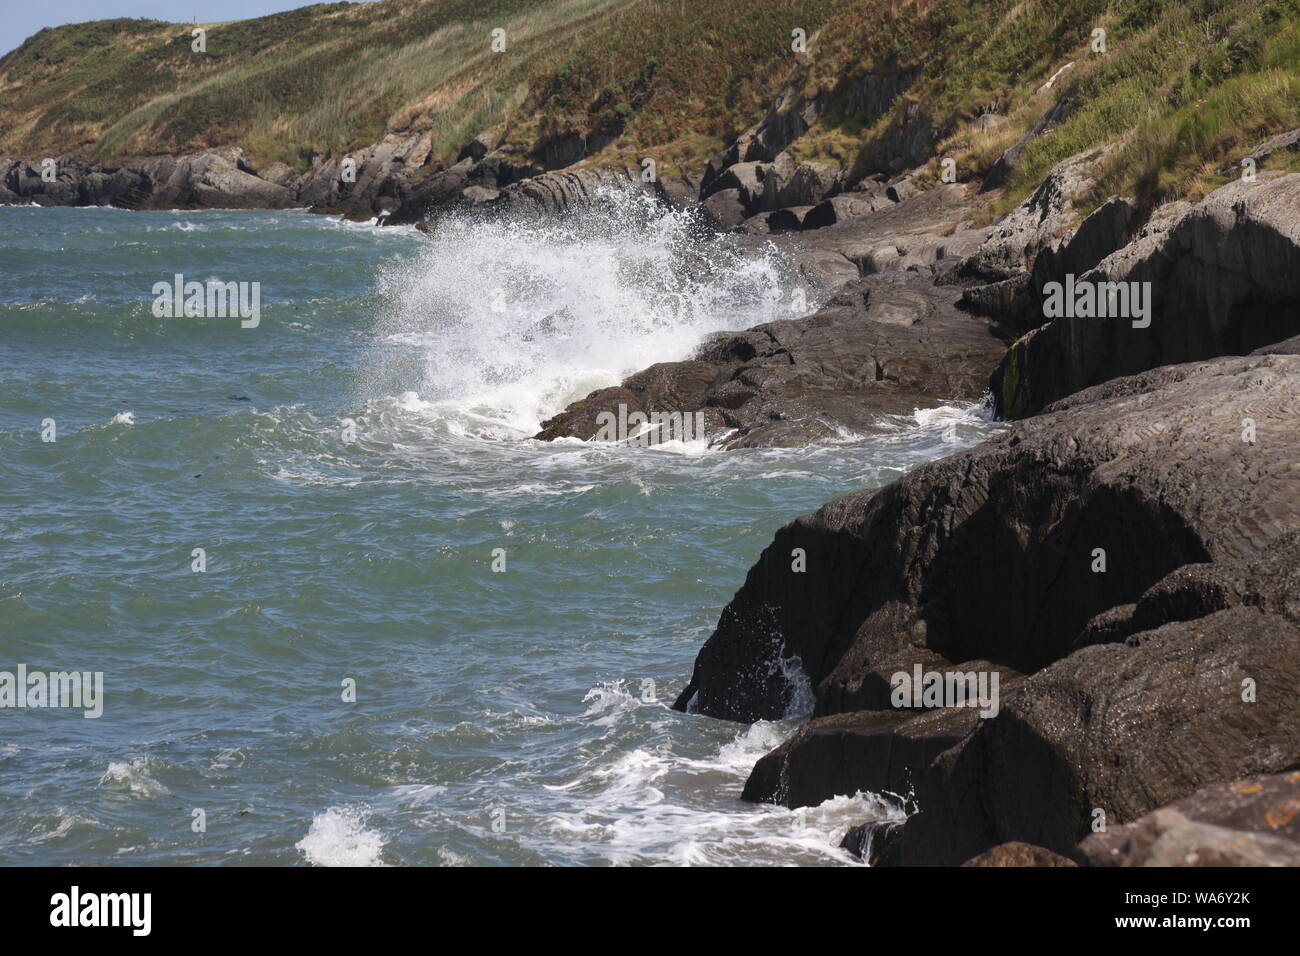 waves breaking on rocks, Gwbert, Cardigan, Wales Stock Photo